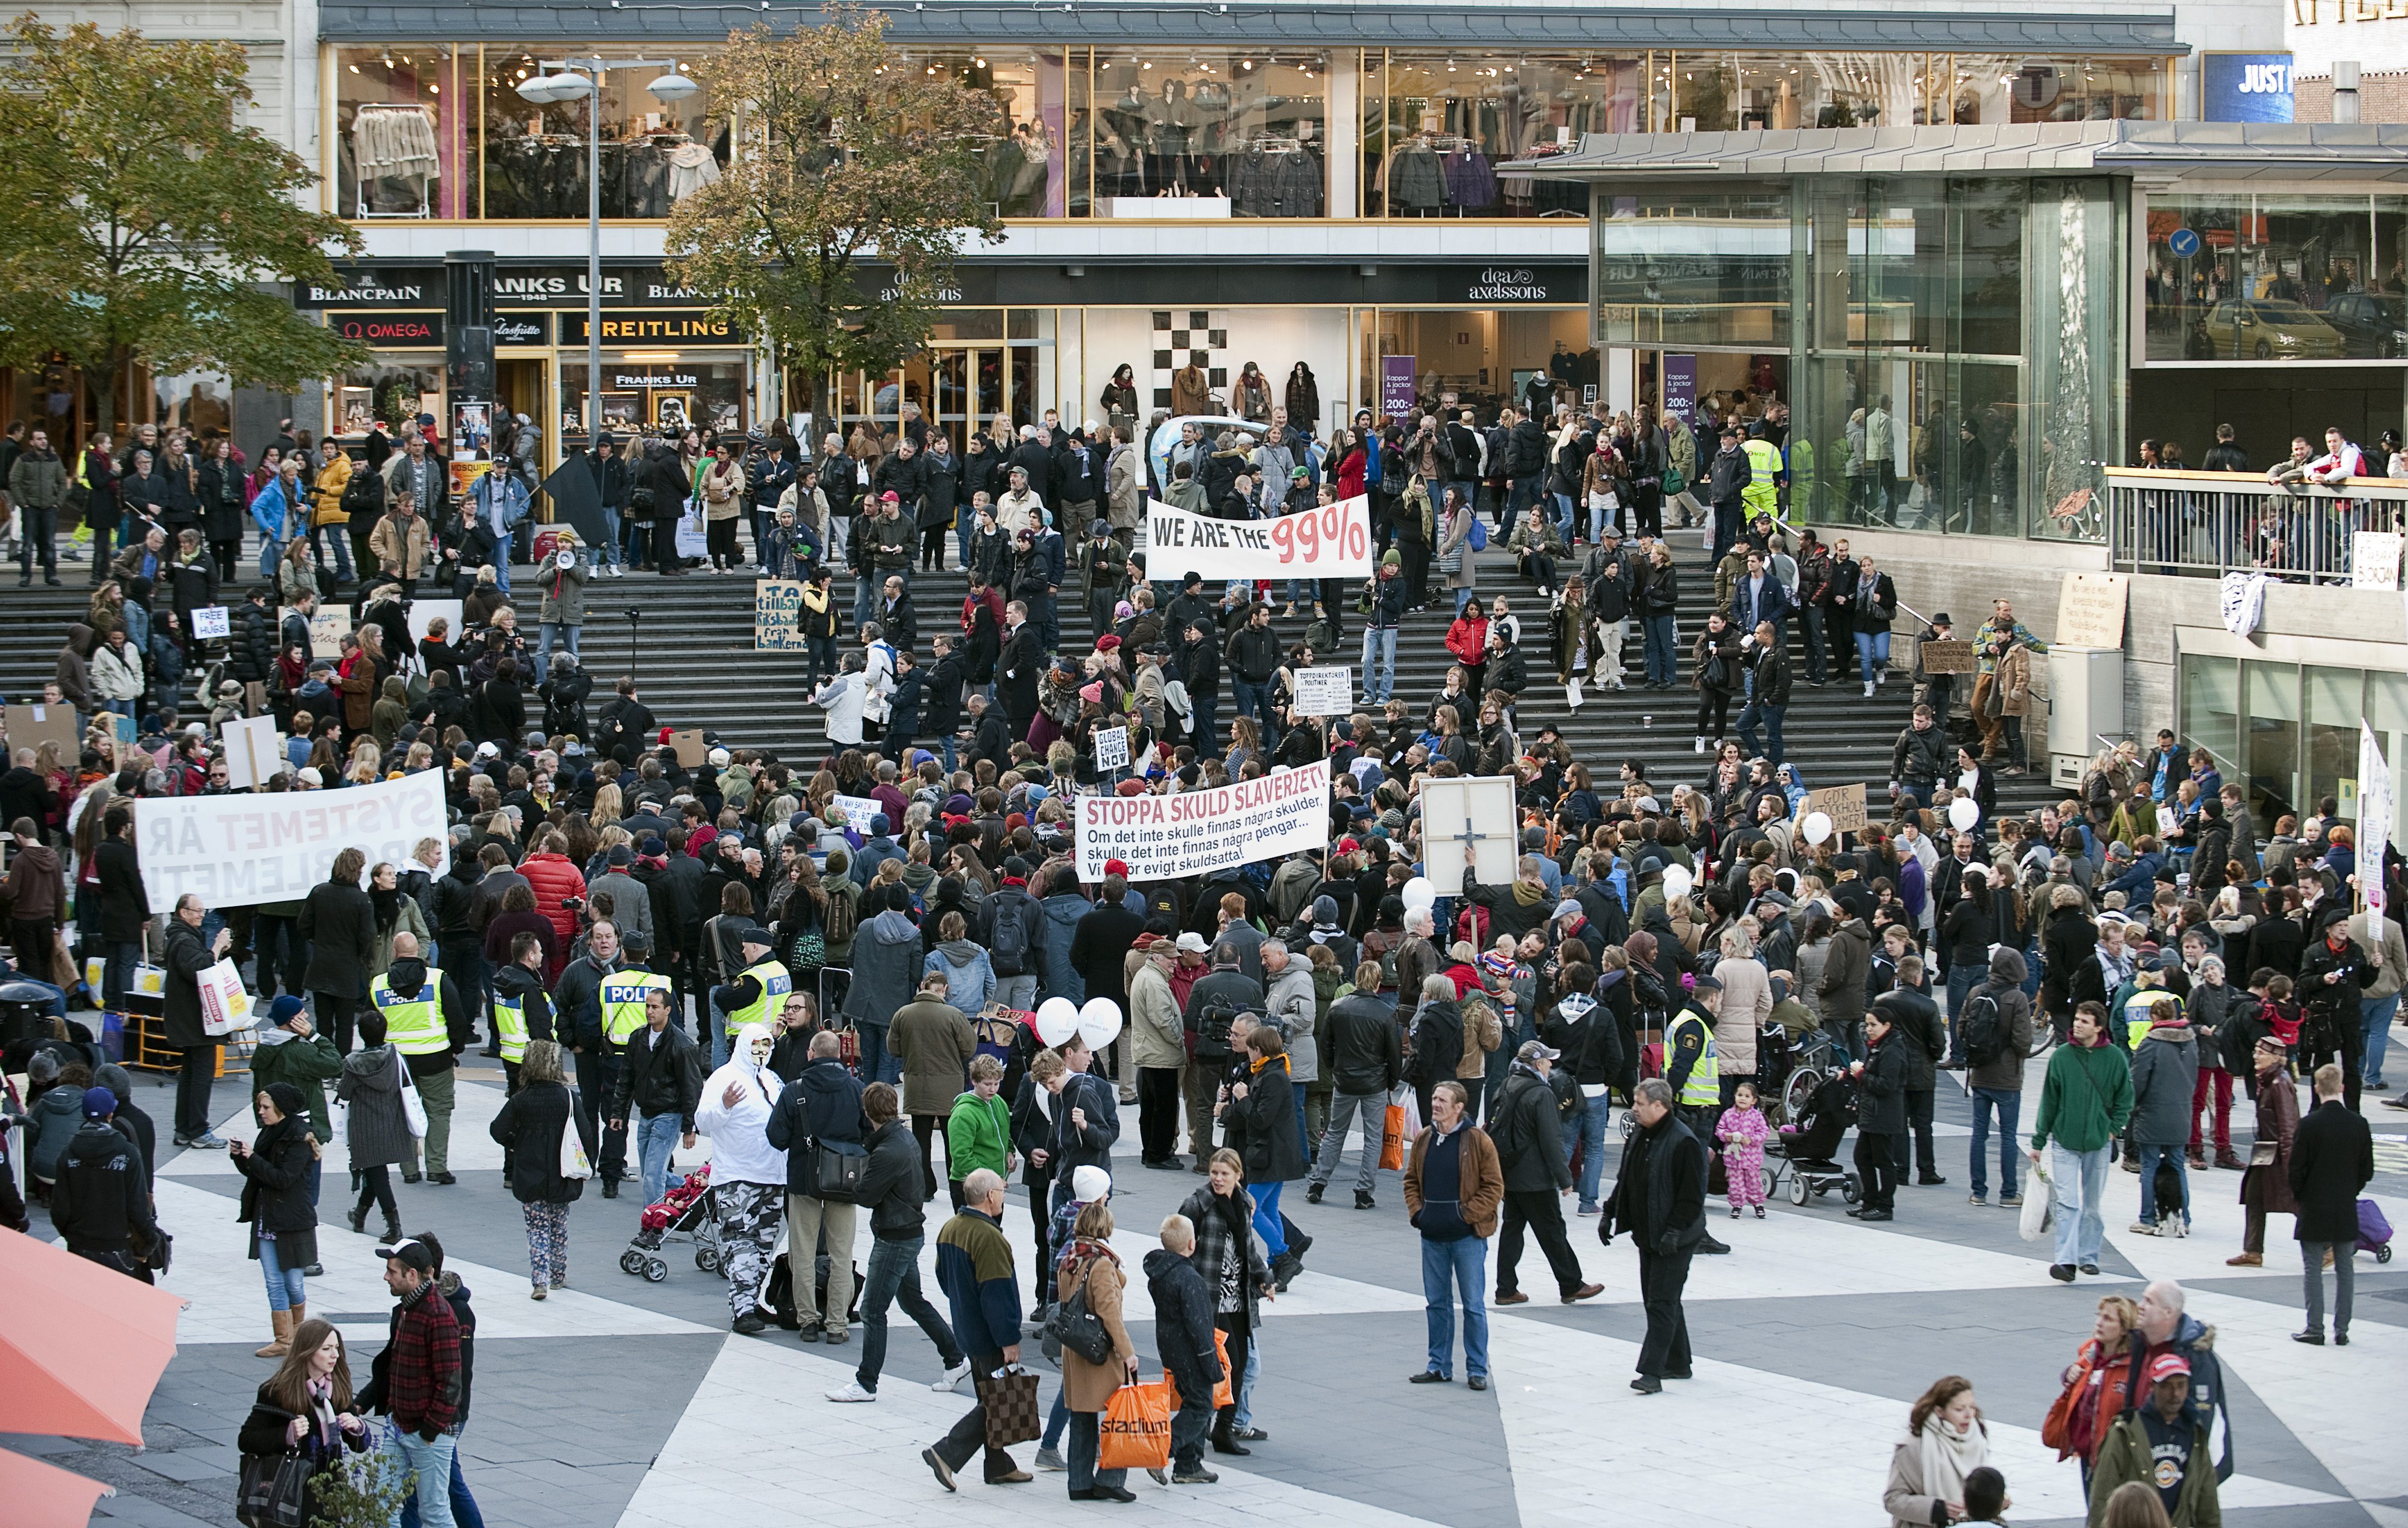 Sergels Torg, Demonstration, Occupy, Protester, USA, Wall Street, Ekonomi, Politik, Occupy Wall Street, Occupy Stockholm